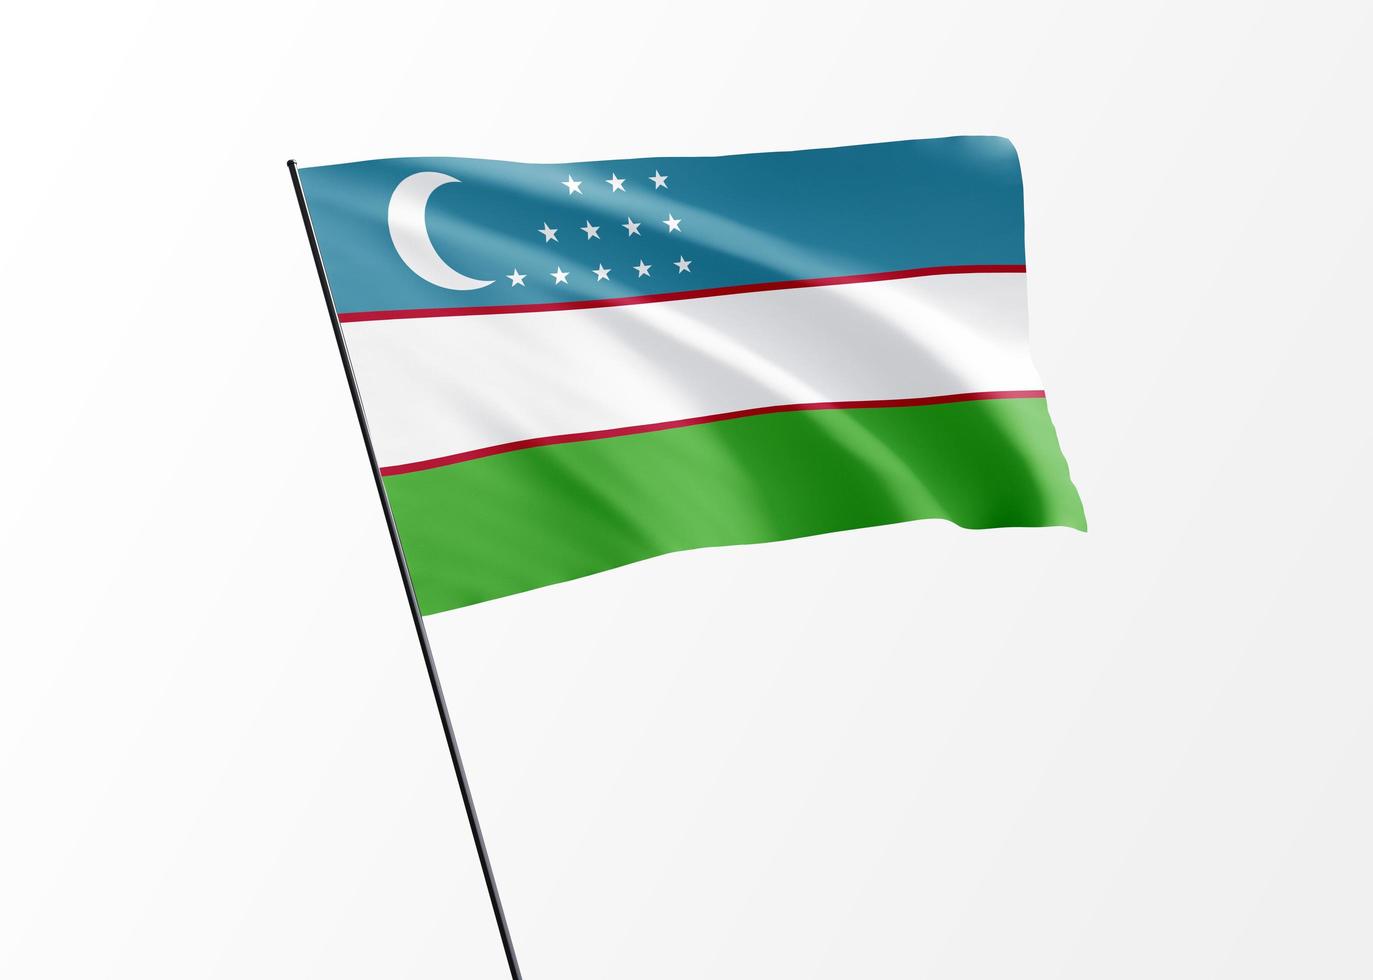 Uzbekistan flag flying high in the isolated background Uzbekistan independence day. World national flag collection photo